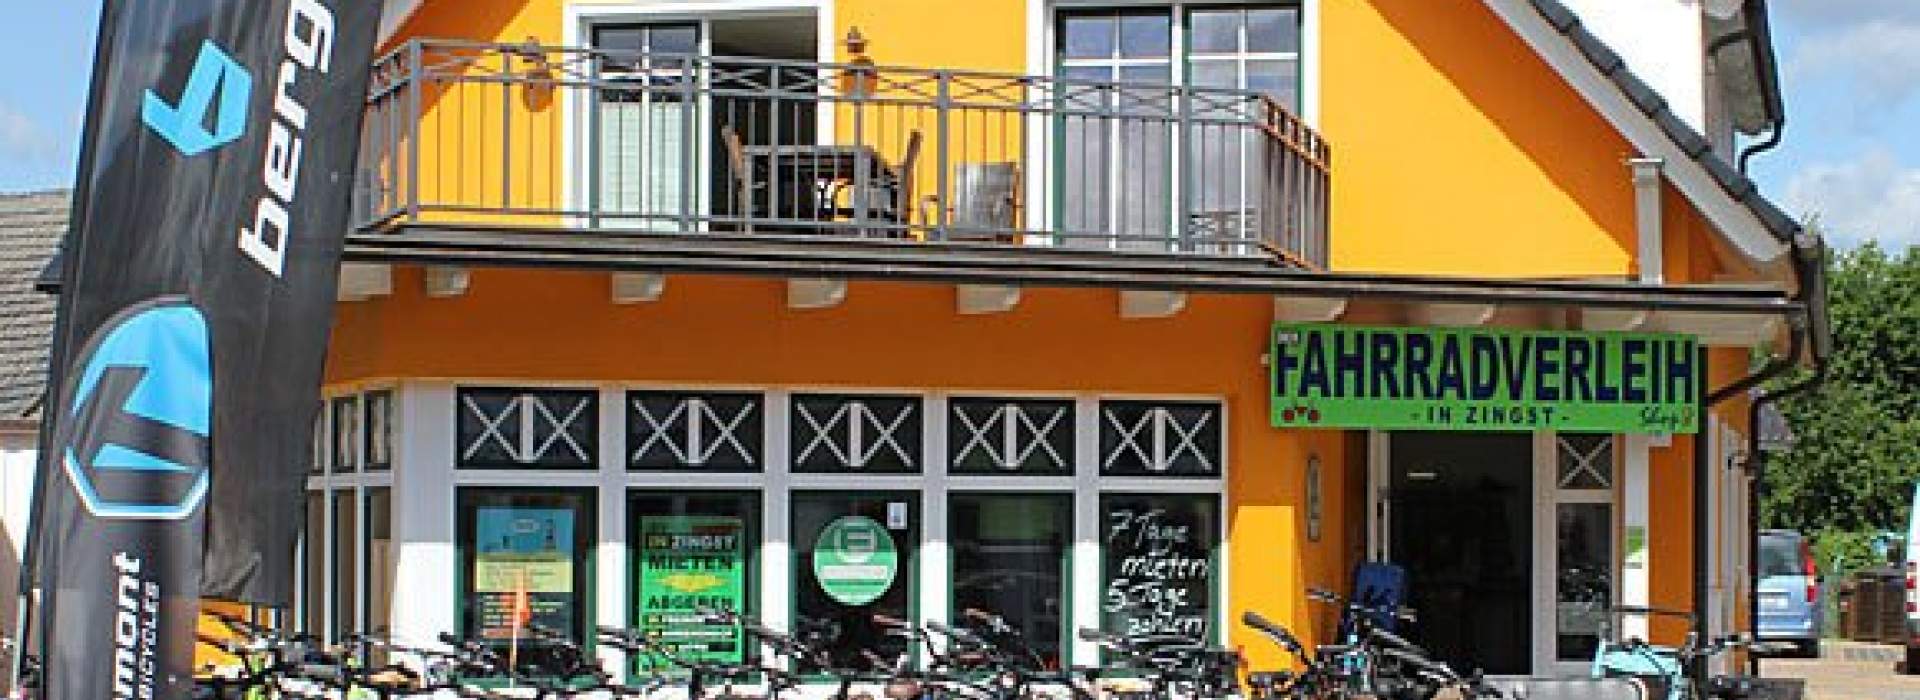 Fahrradverleih Shop 8 VERLEIH + VERKAUF + REPARATUR Strandstraße 19 18374 Zingst